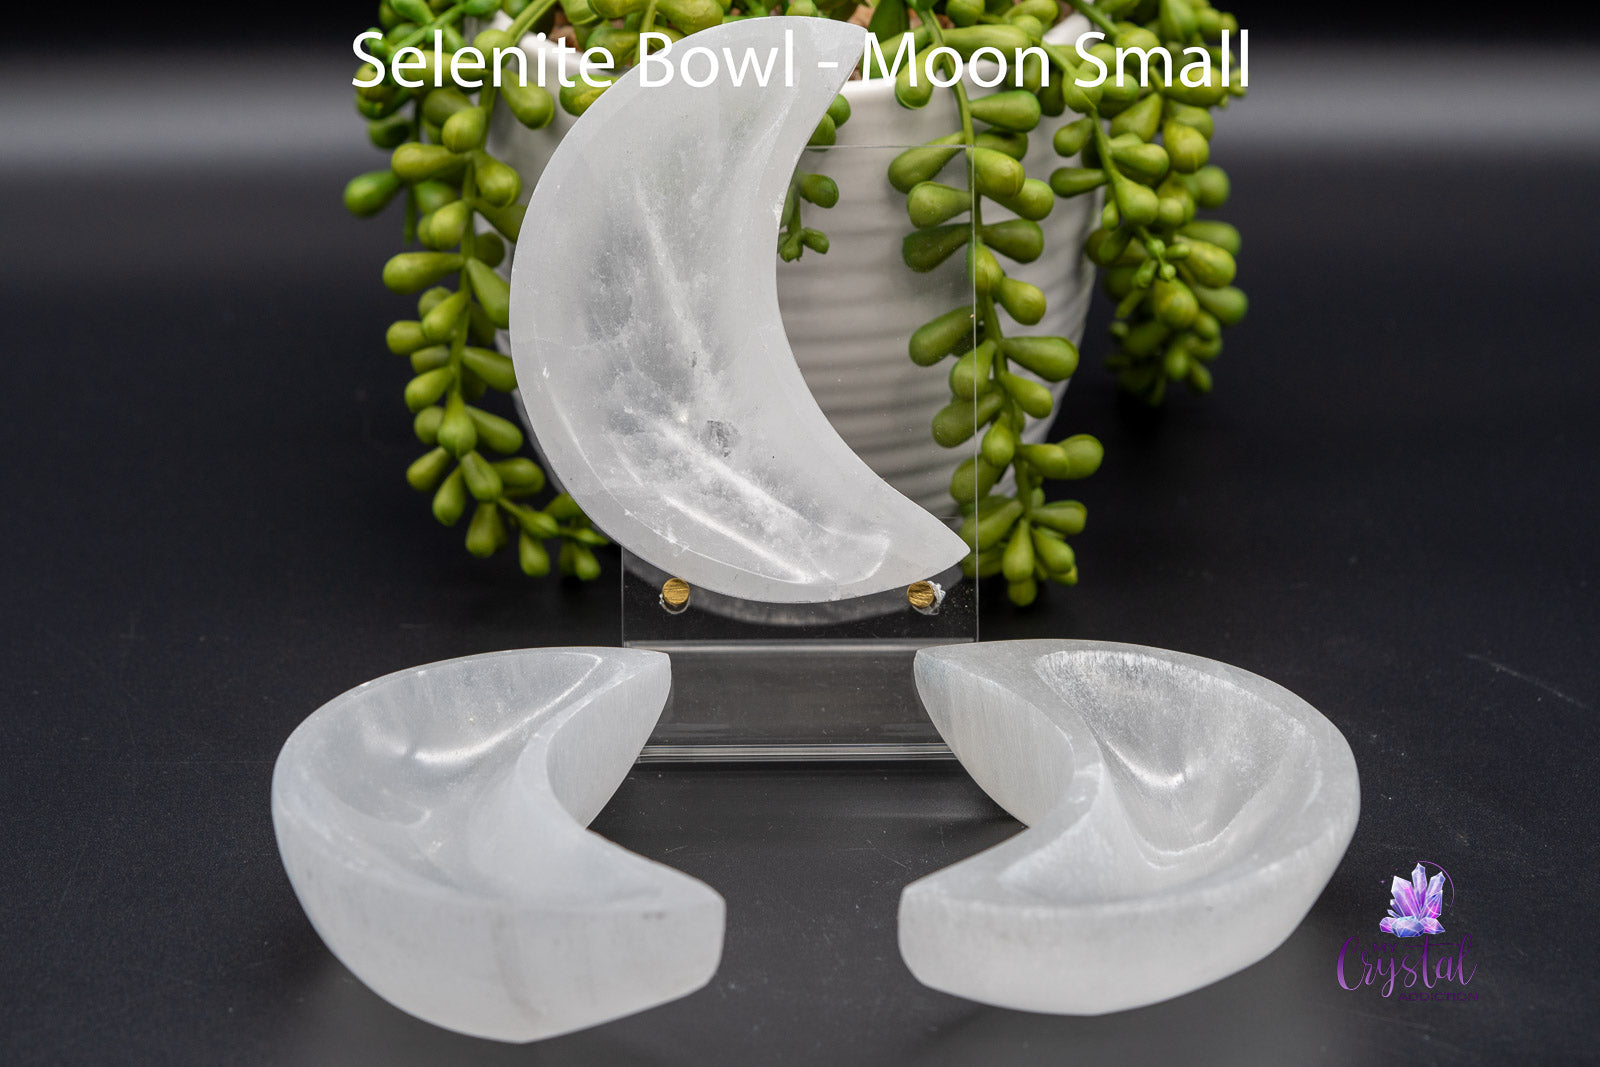 Selenite Bowl - Moon 4"-6.5" - My Crystal Addiction